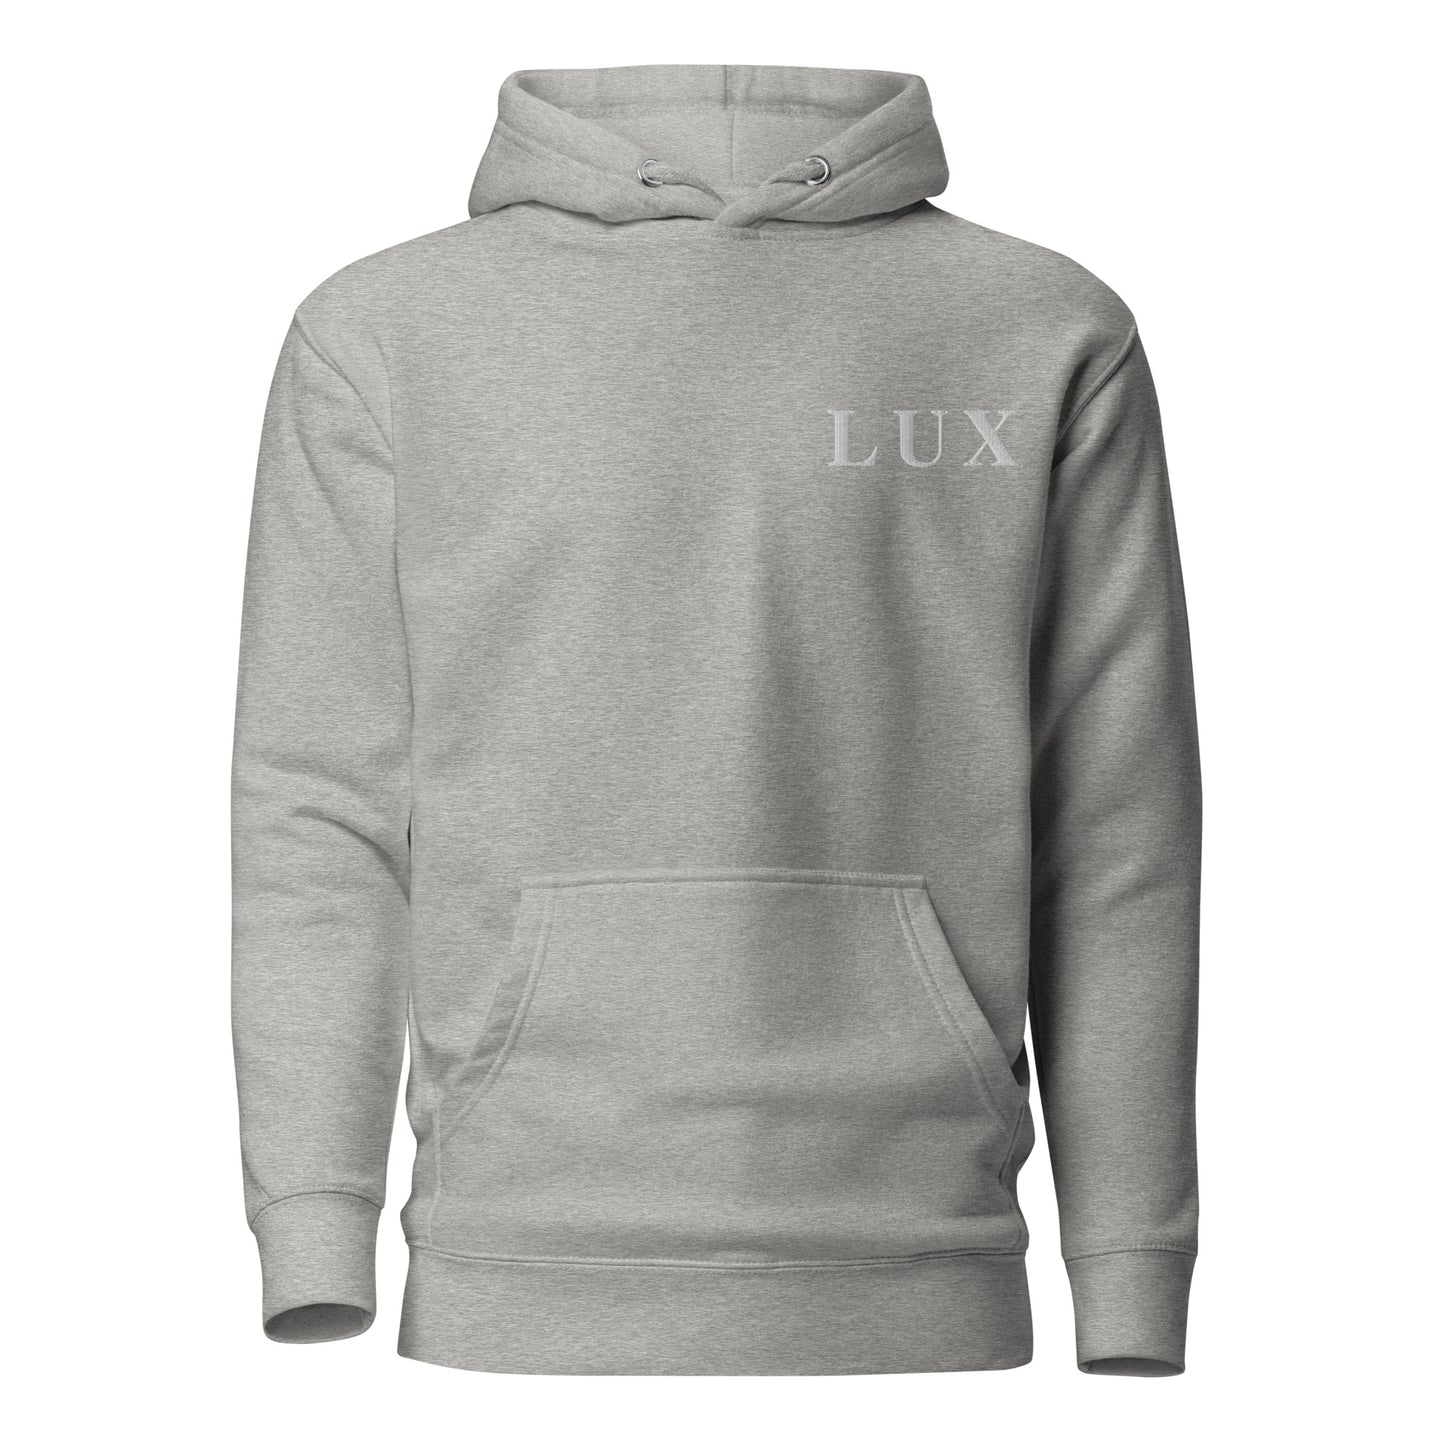 "LUX" Hooded Sweatshirt (Unisex)